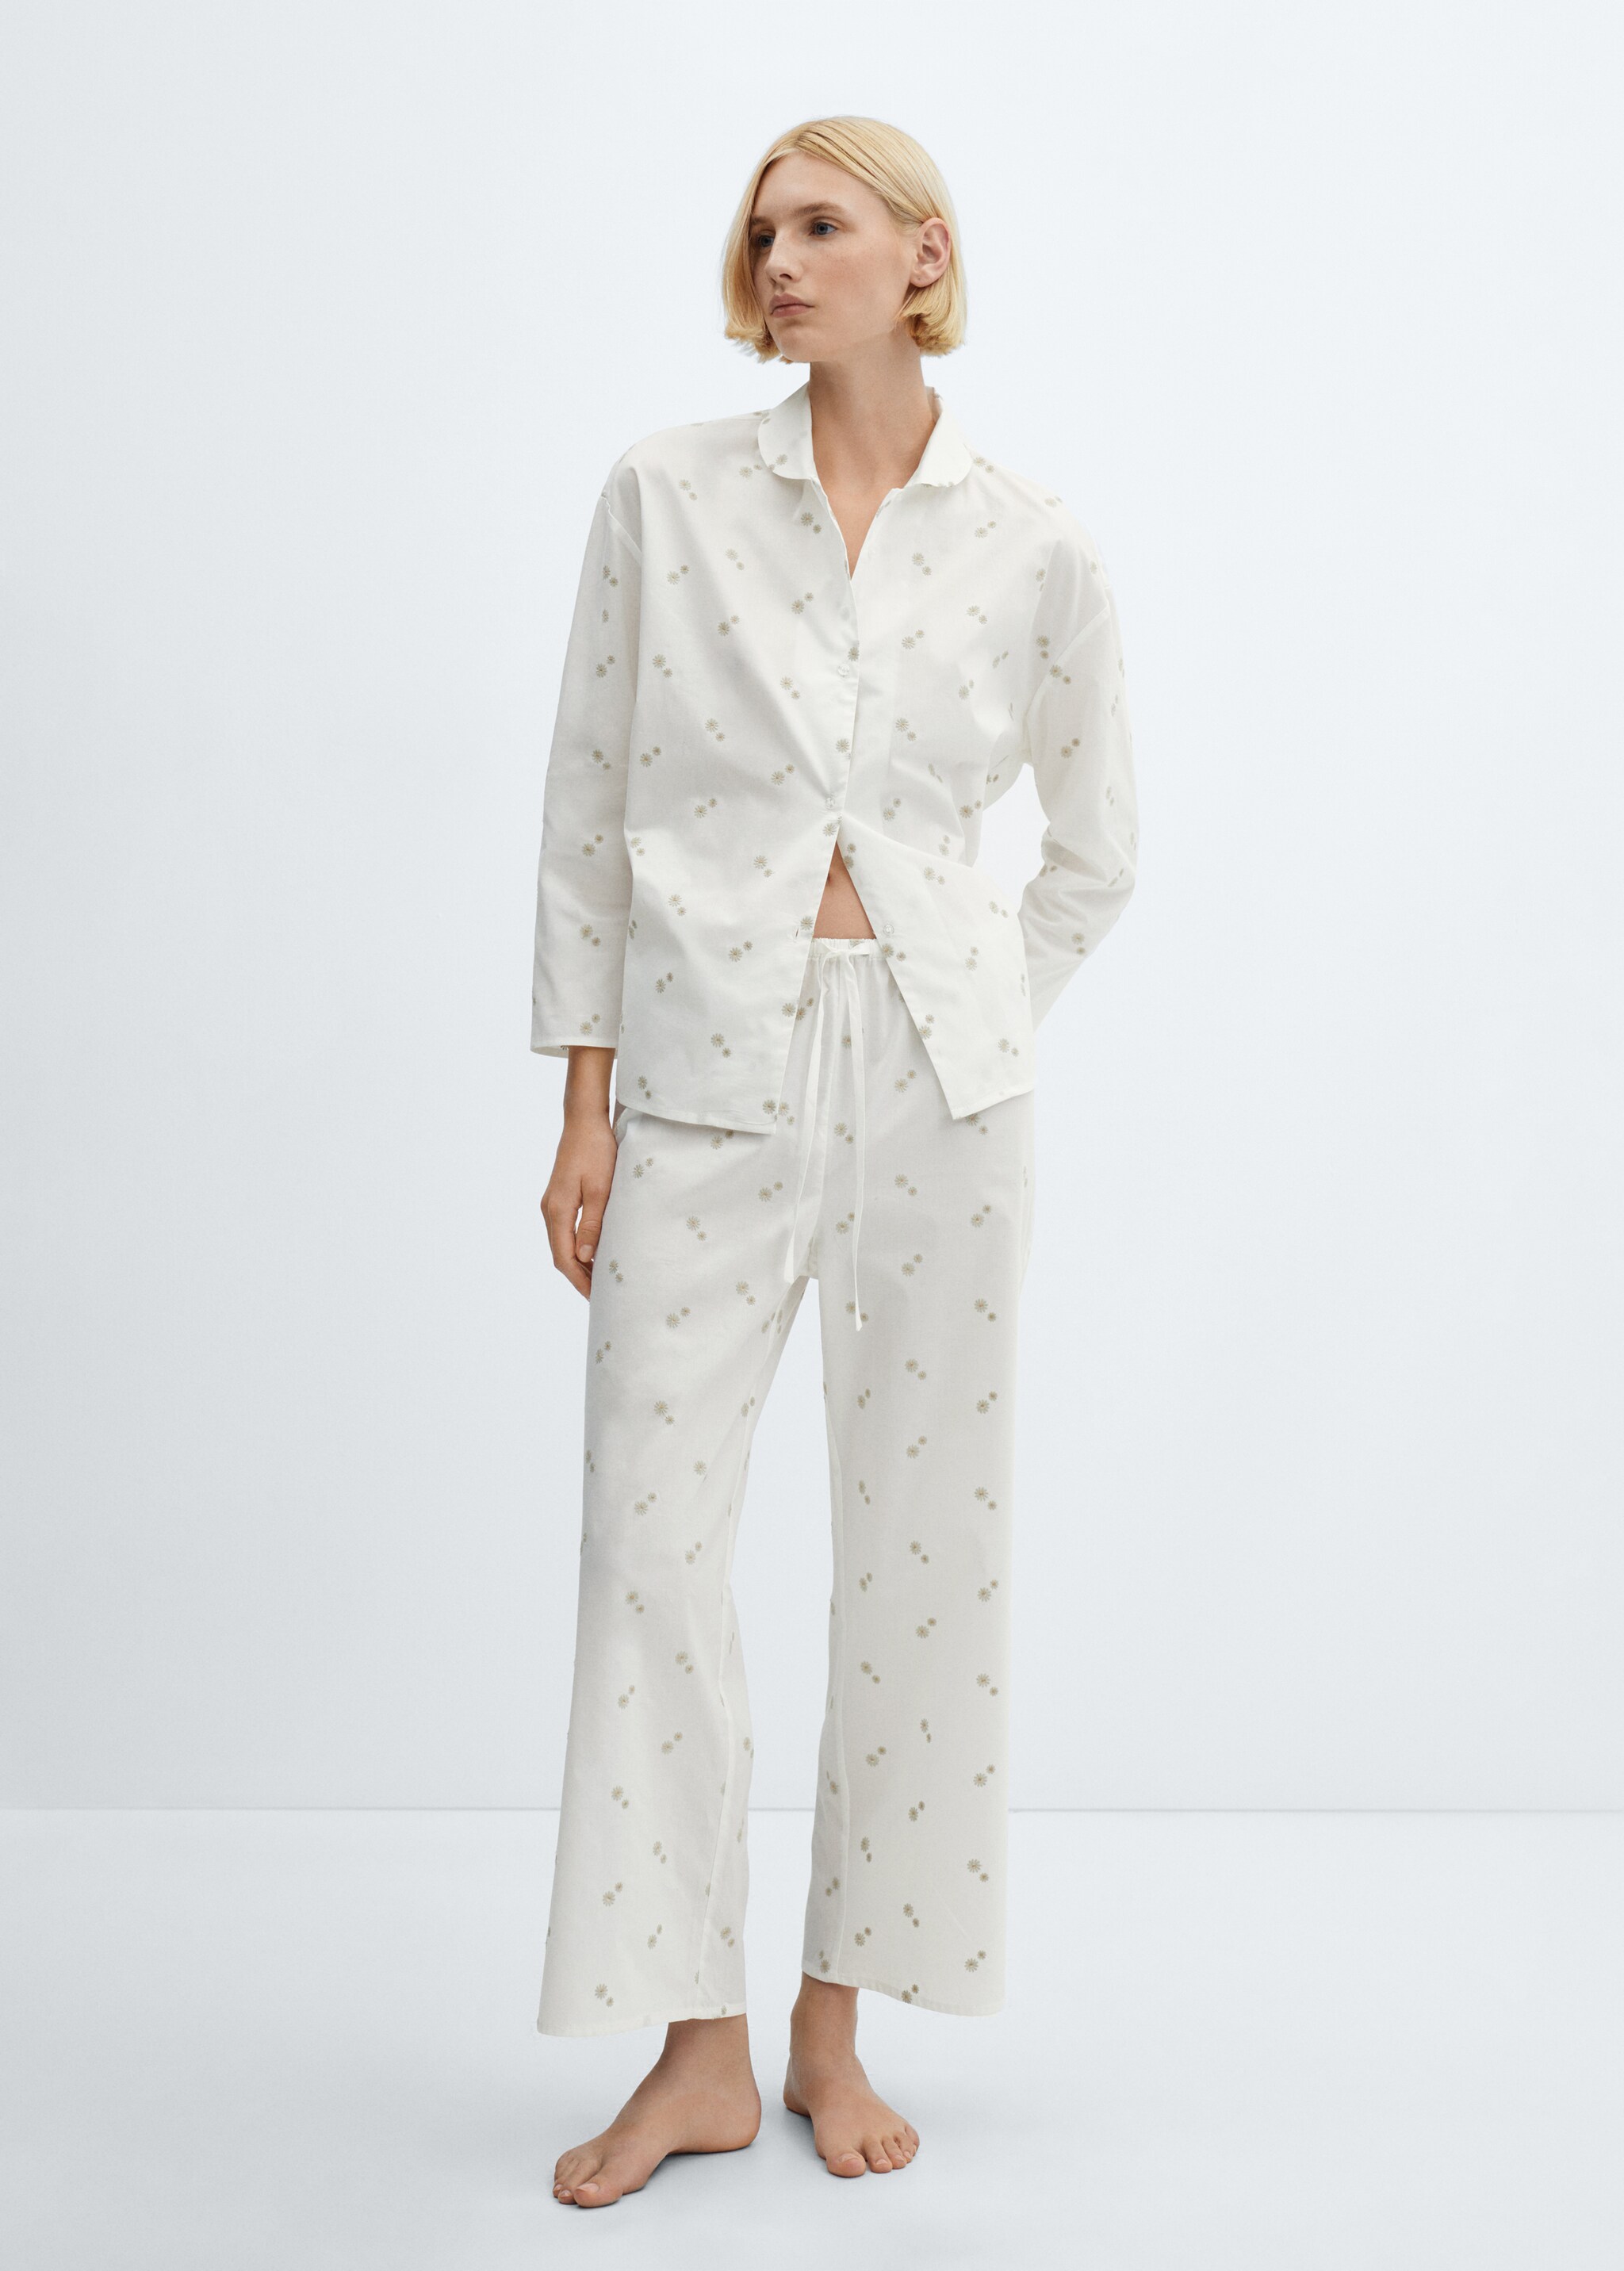 Pantalon pyjama coton broderie florale - Plan général